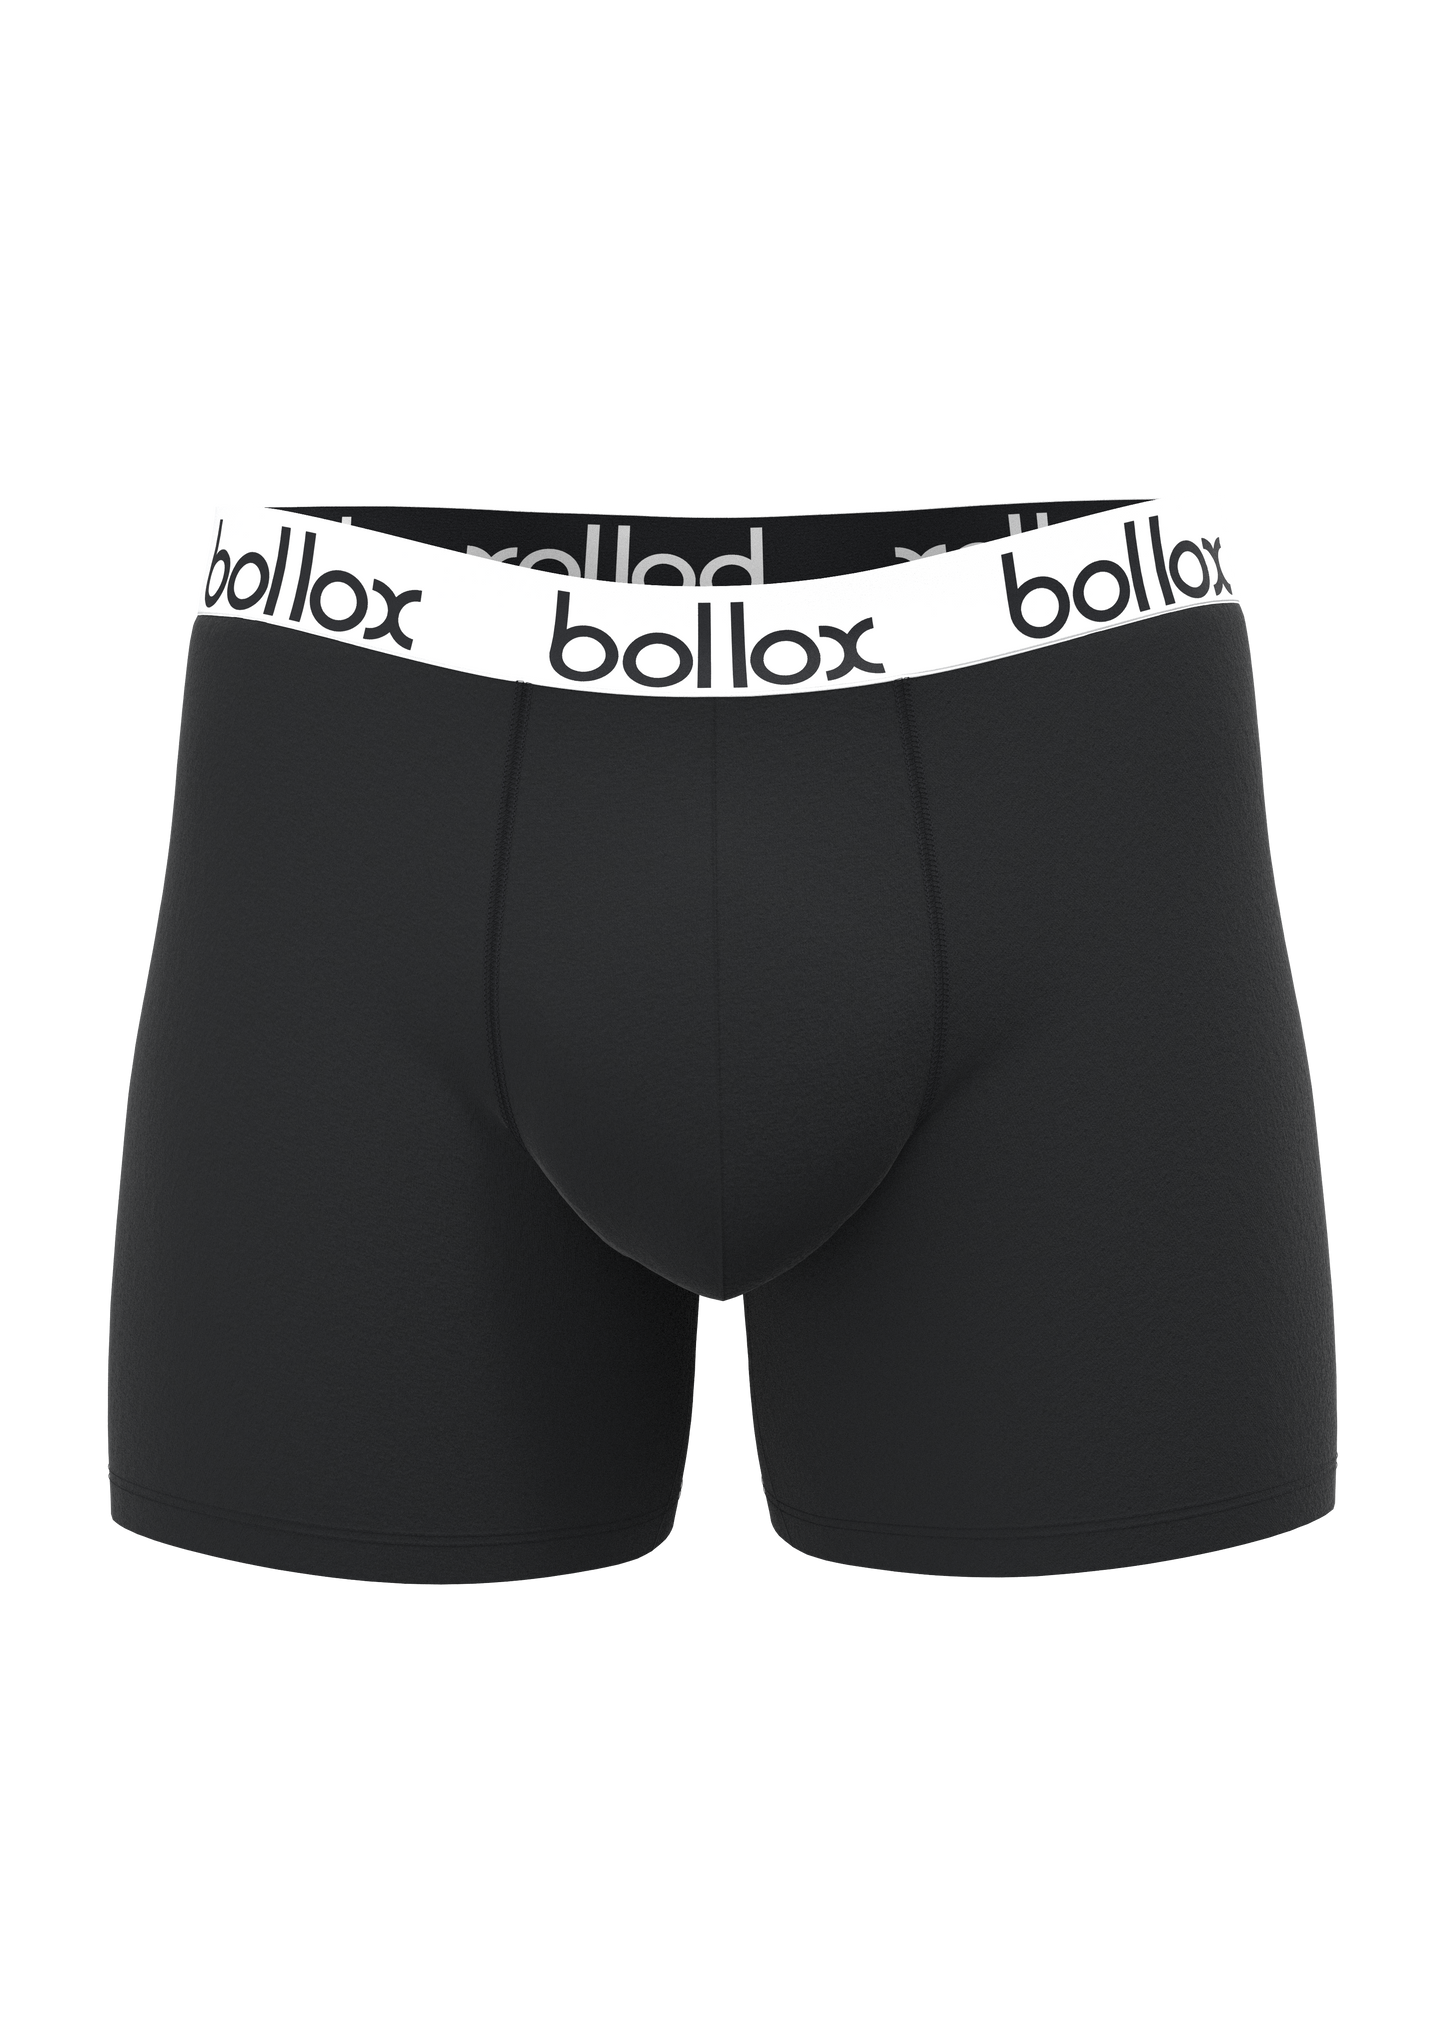 Black & White Duo Tone Set (2 pack) - Men's cotton boxer shorts